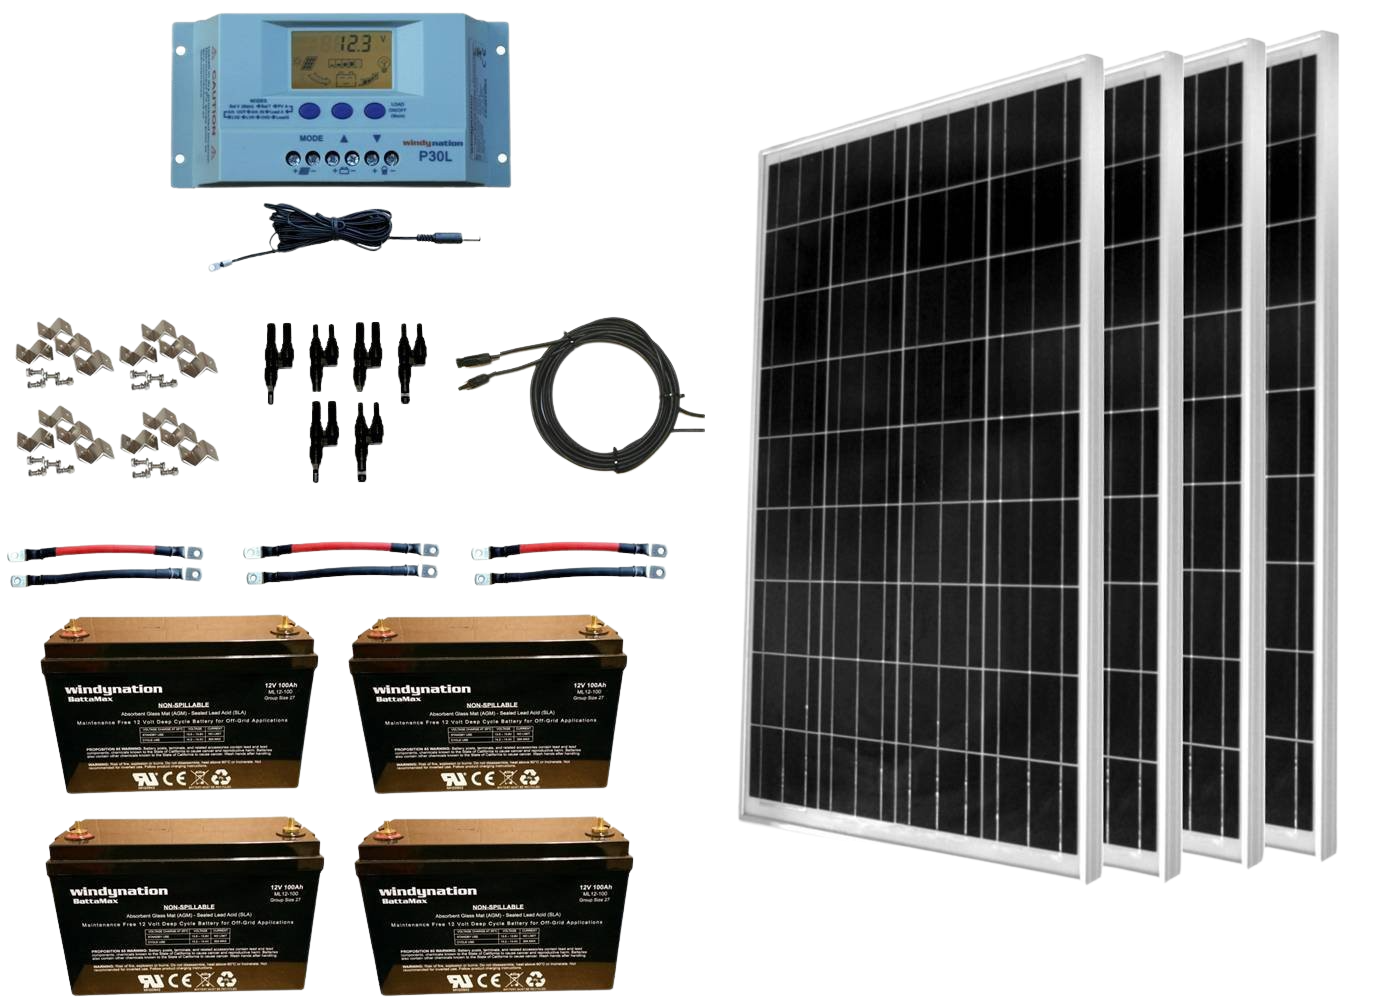 WindyNation SOK-400WP-P30L-400B 400 Watt Solar Panel Kit with 400ah AGM Battery New